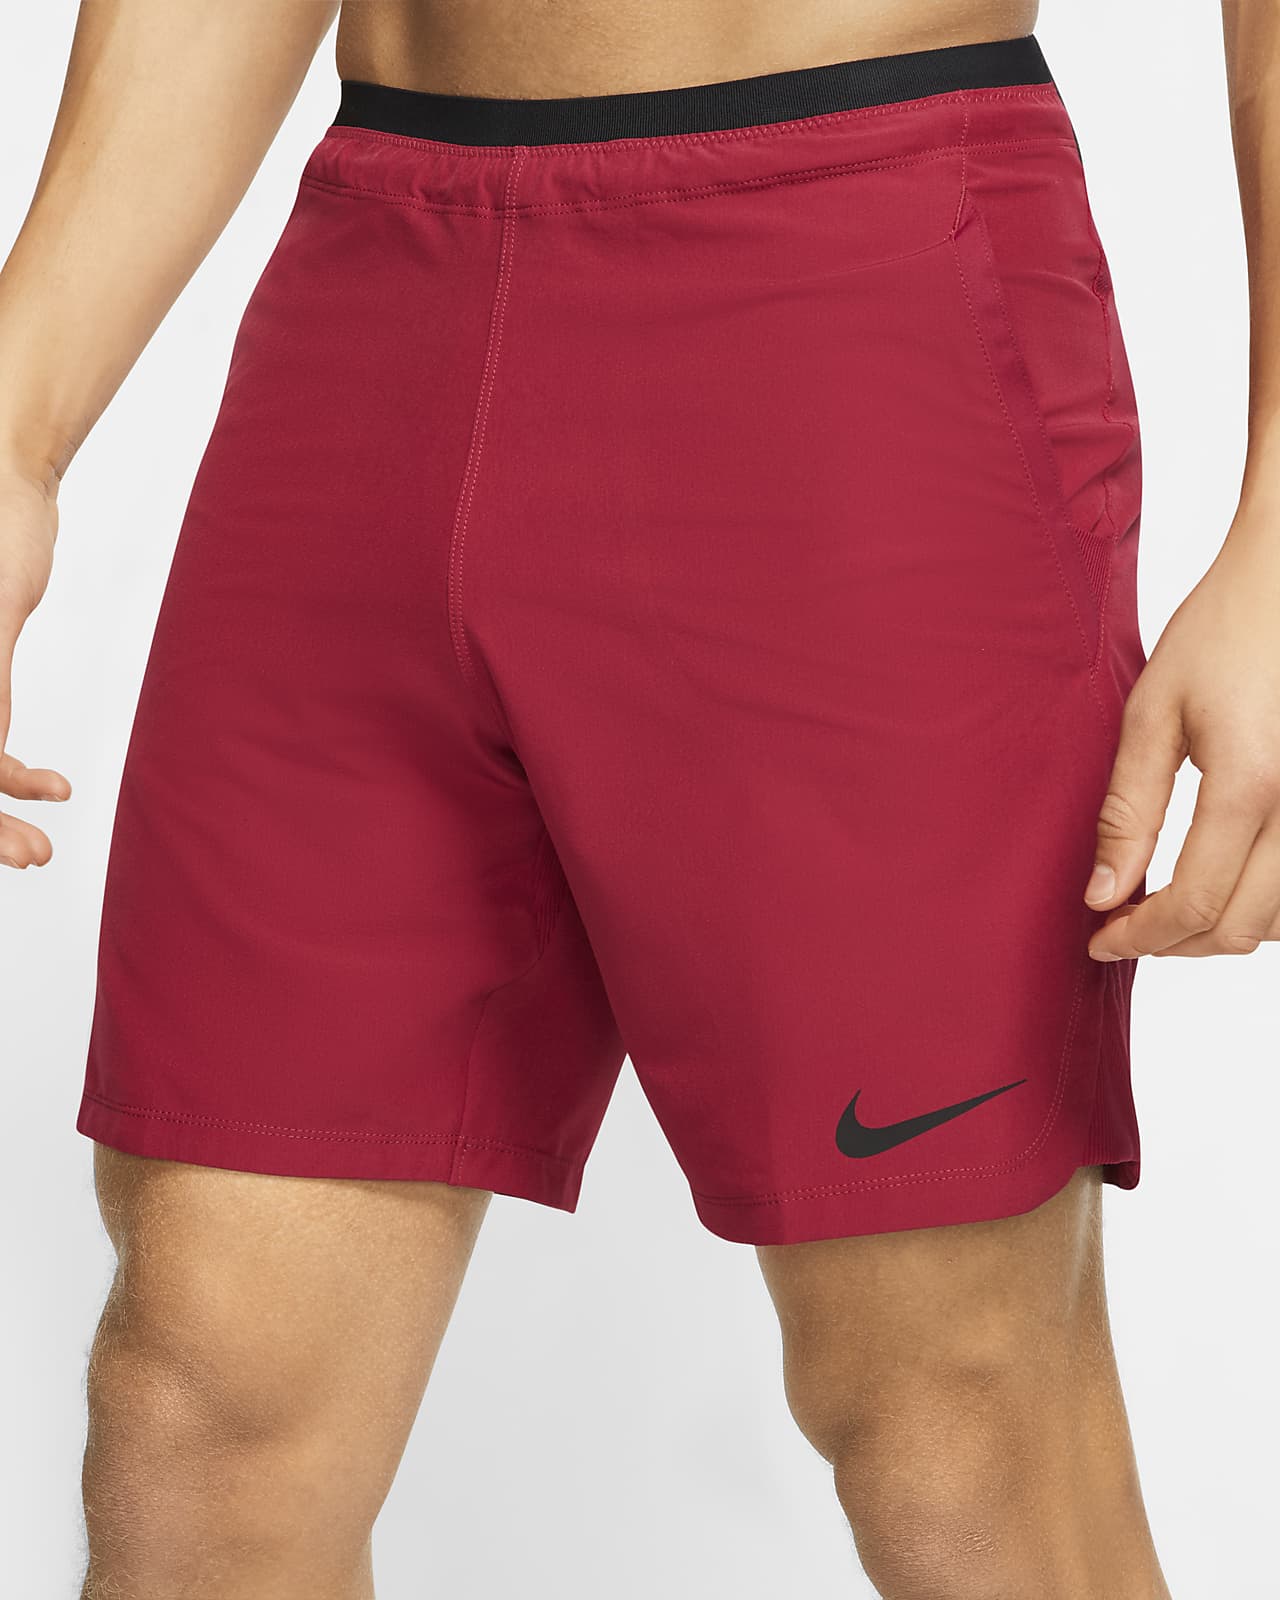 nike shorts with zipper pockets mens